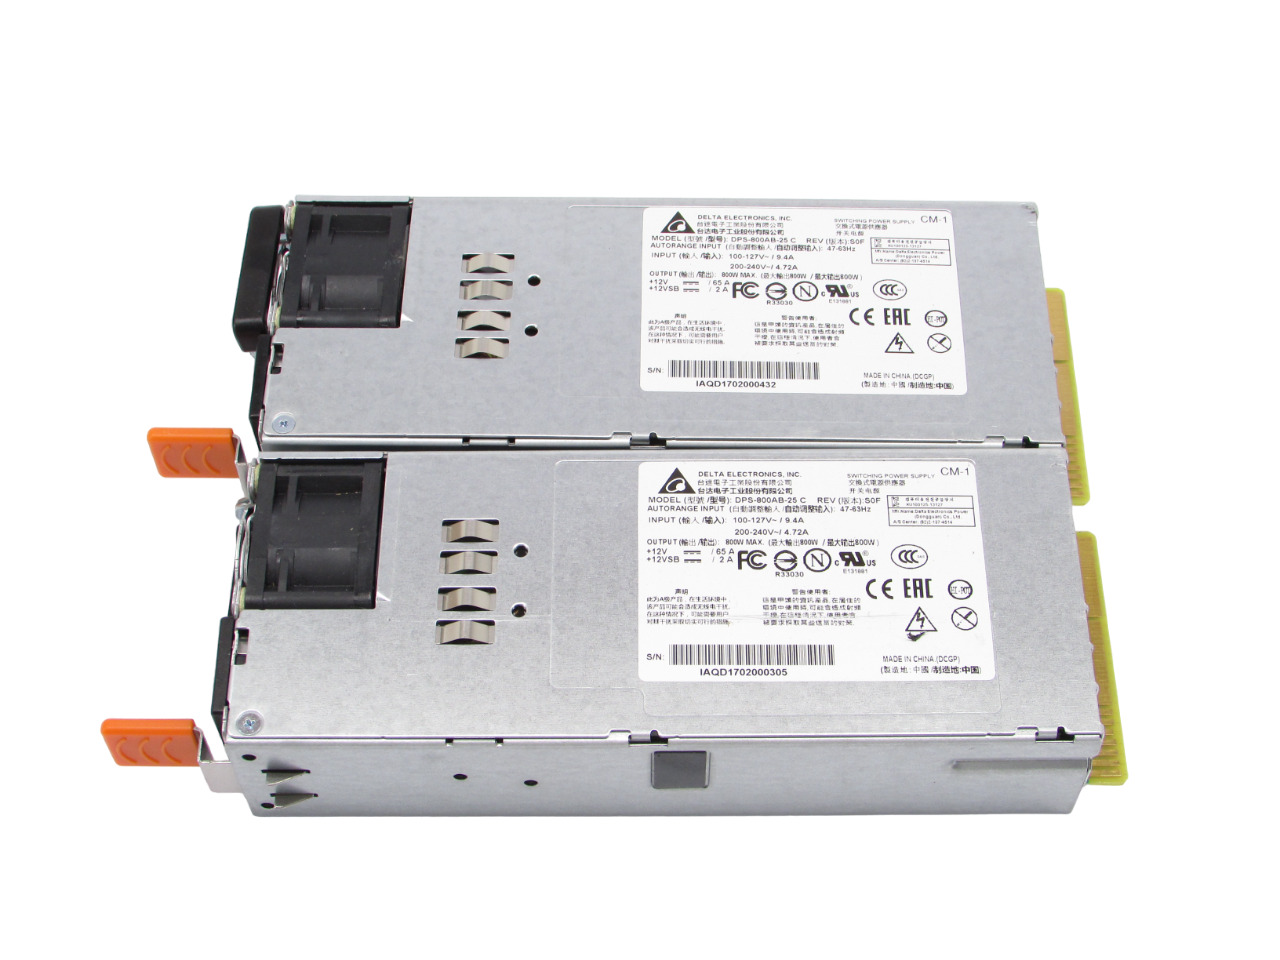 2x Delta Electronics DPS-800AB-25 C 800W Switching Power Supply PSU Lot of 2